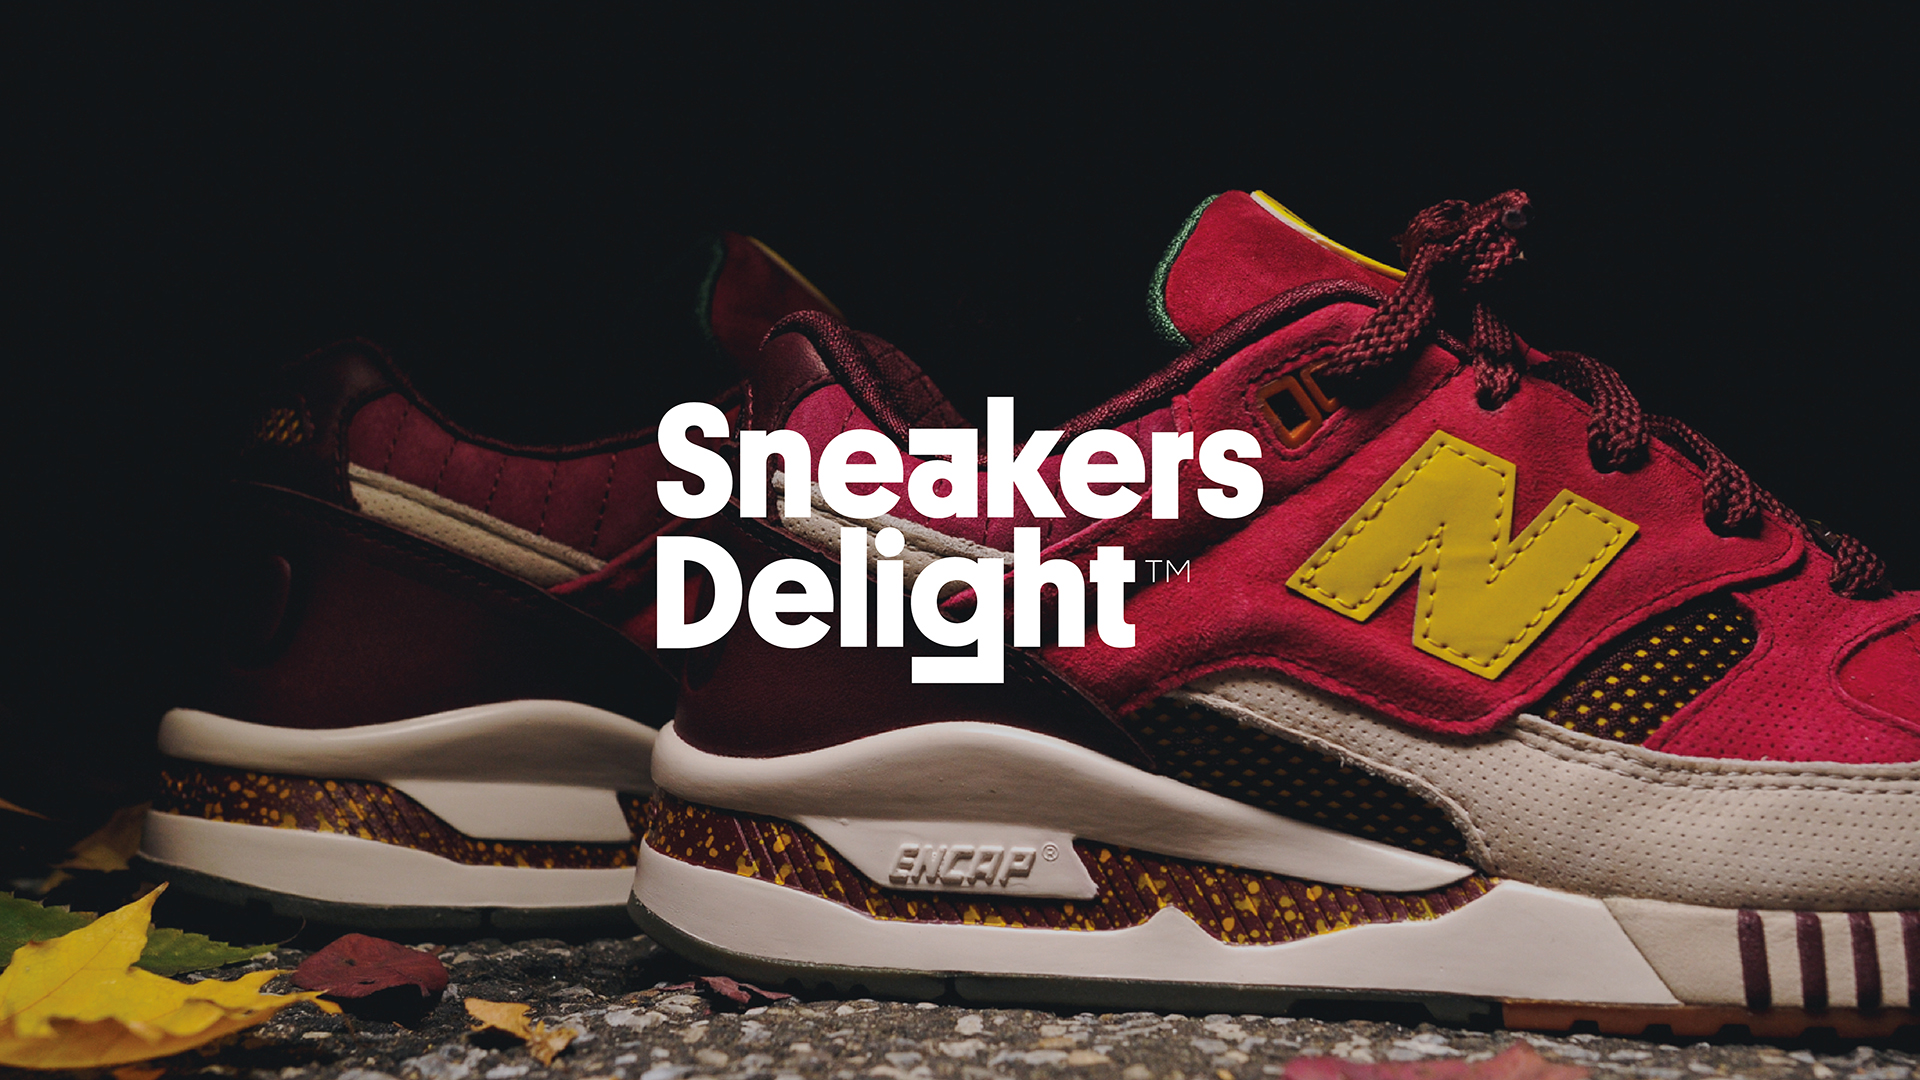 kom sammen taktik serviet Sneakers Delight™ - iamfromlx